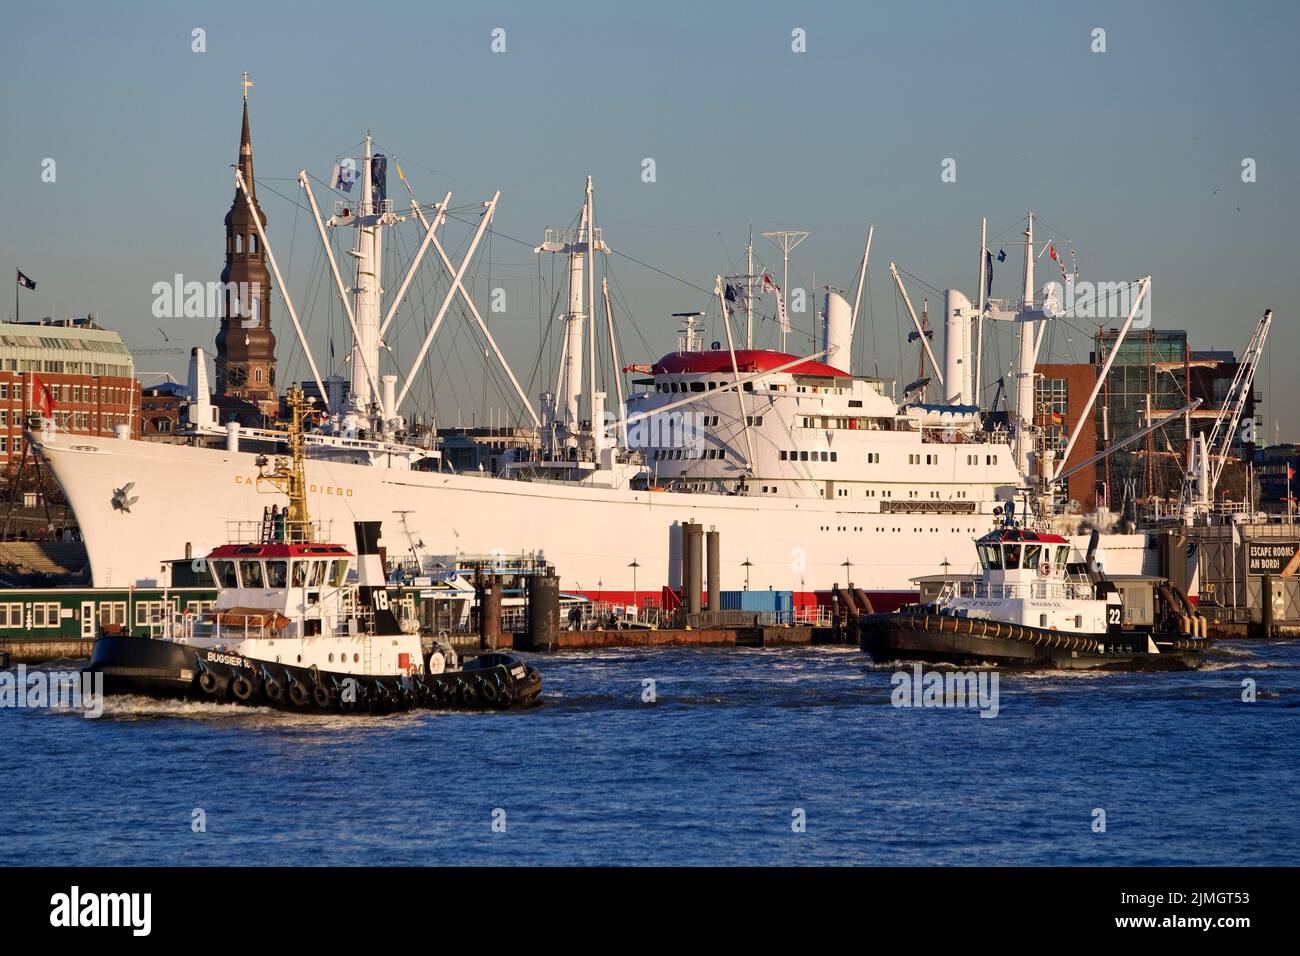 Museum ship Cap San Diego on the North Elbe, Hamburg, Germany, Europe Stock Photo